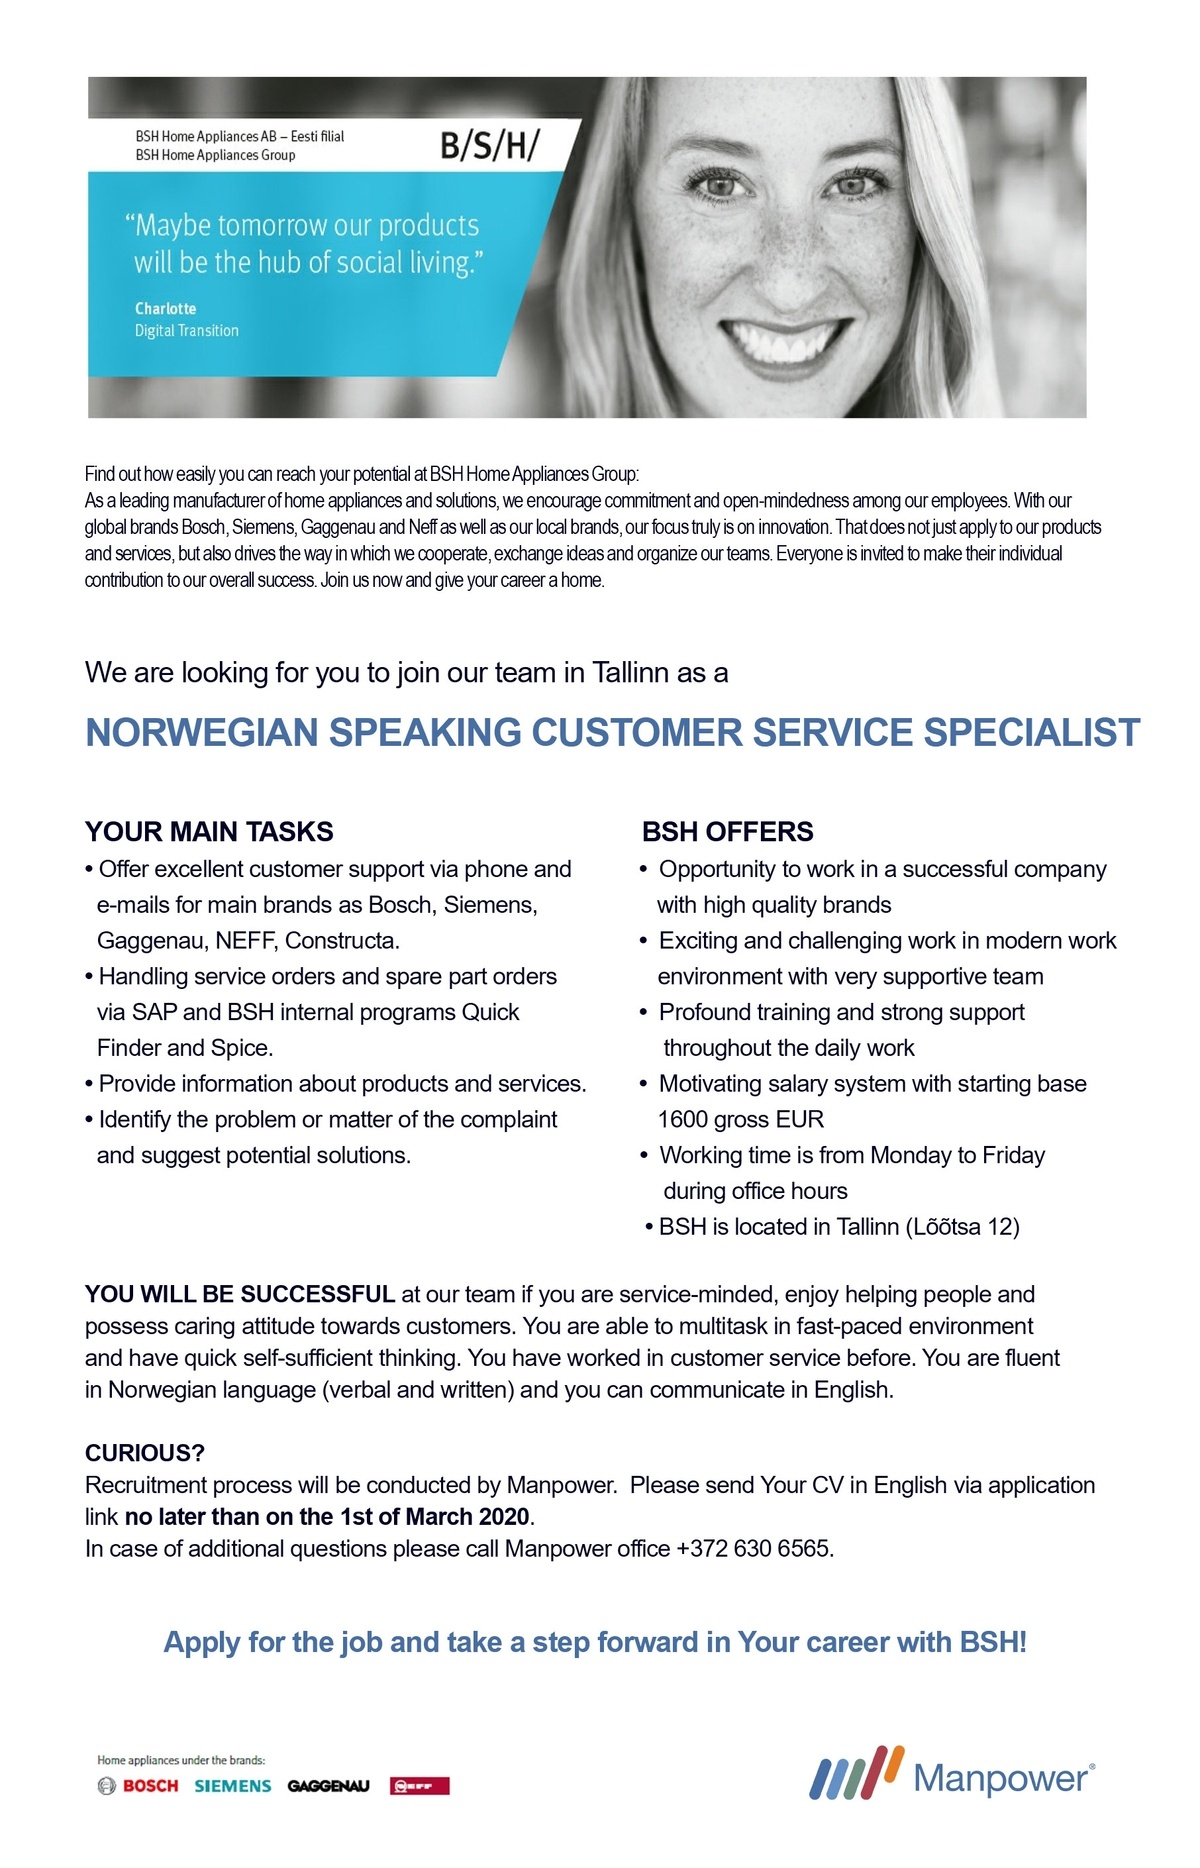 Manpower OÜ Norwegian Speaking Customer Service Specialist